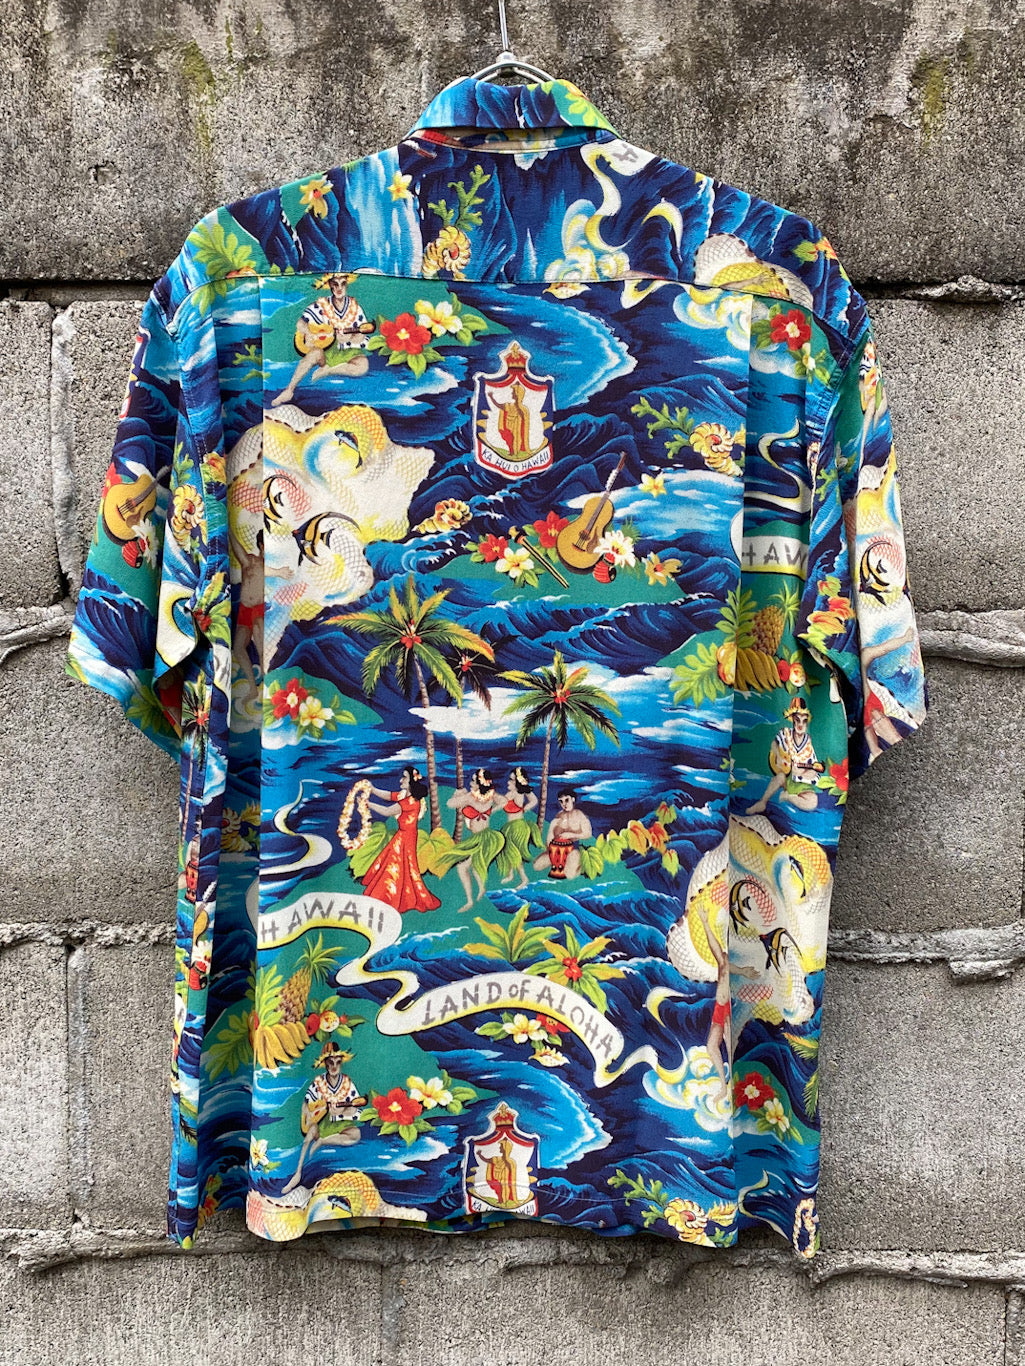 SUN SURF SPECIAL EDITION LAND OF ALOHA HALE HAWAII Aloha Shirt